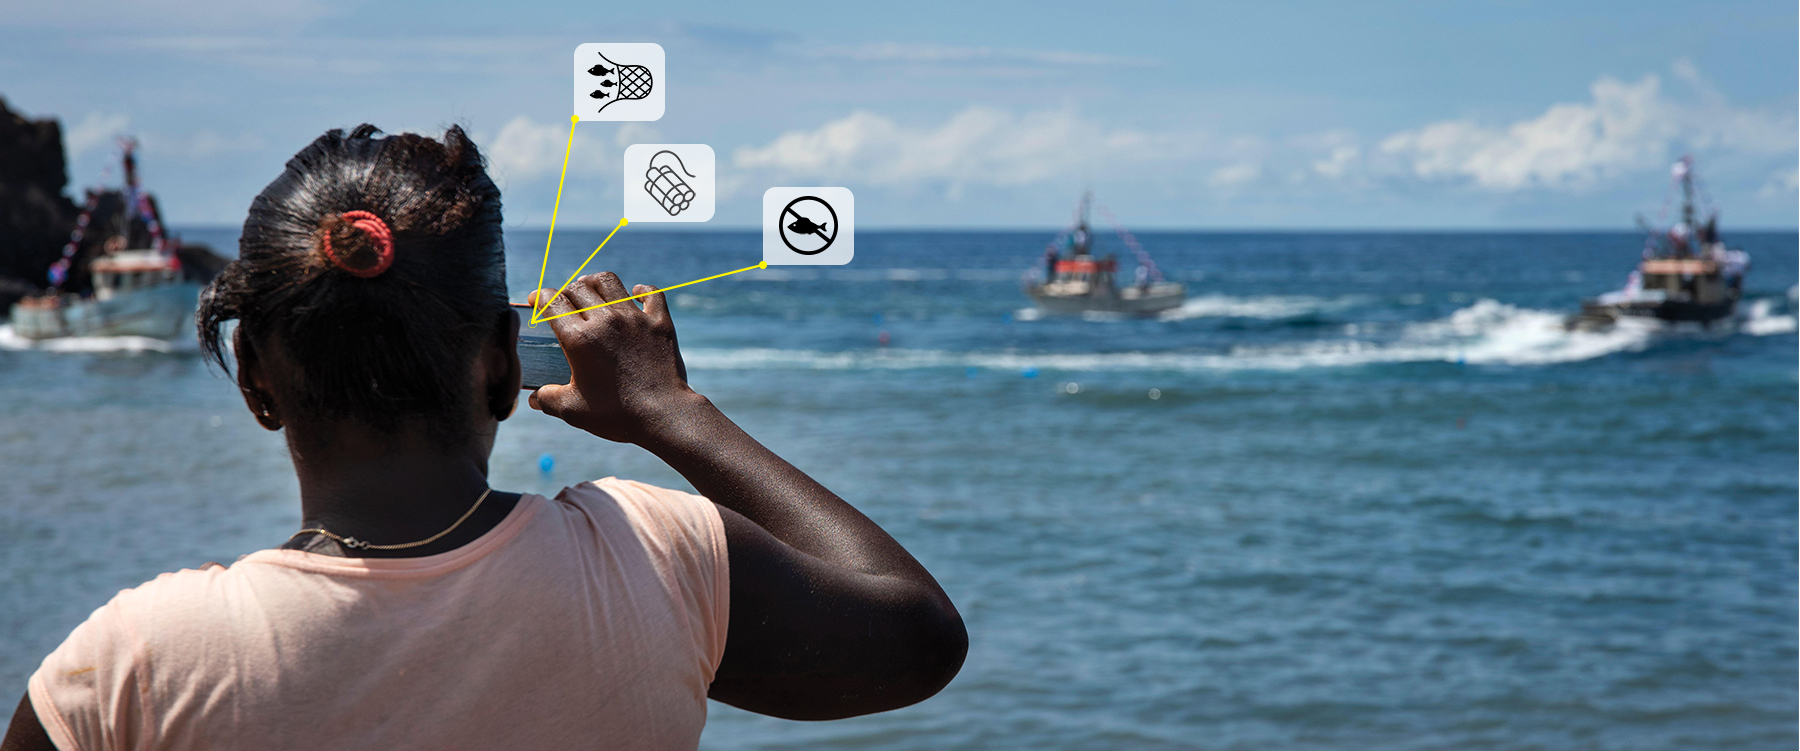 The World's Fishermen as a Maritime Sensor Network